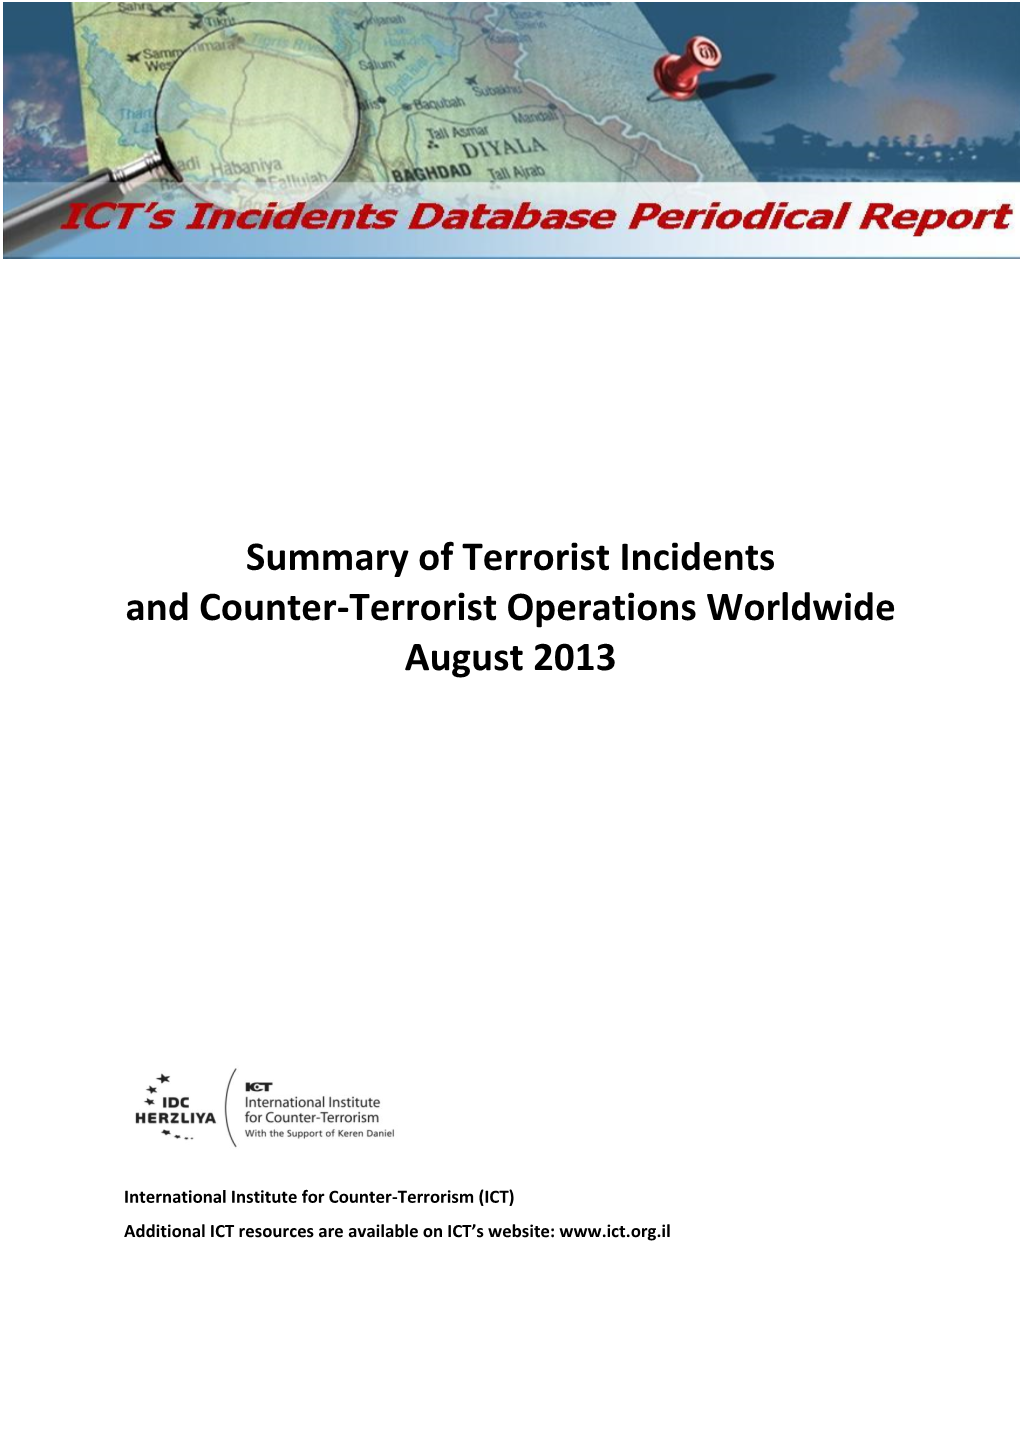 Summary of Terrorist Incidents and Counter-Terrorist Operations Worldwide August 2013